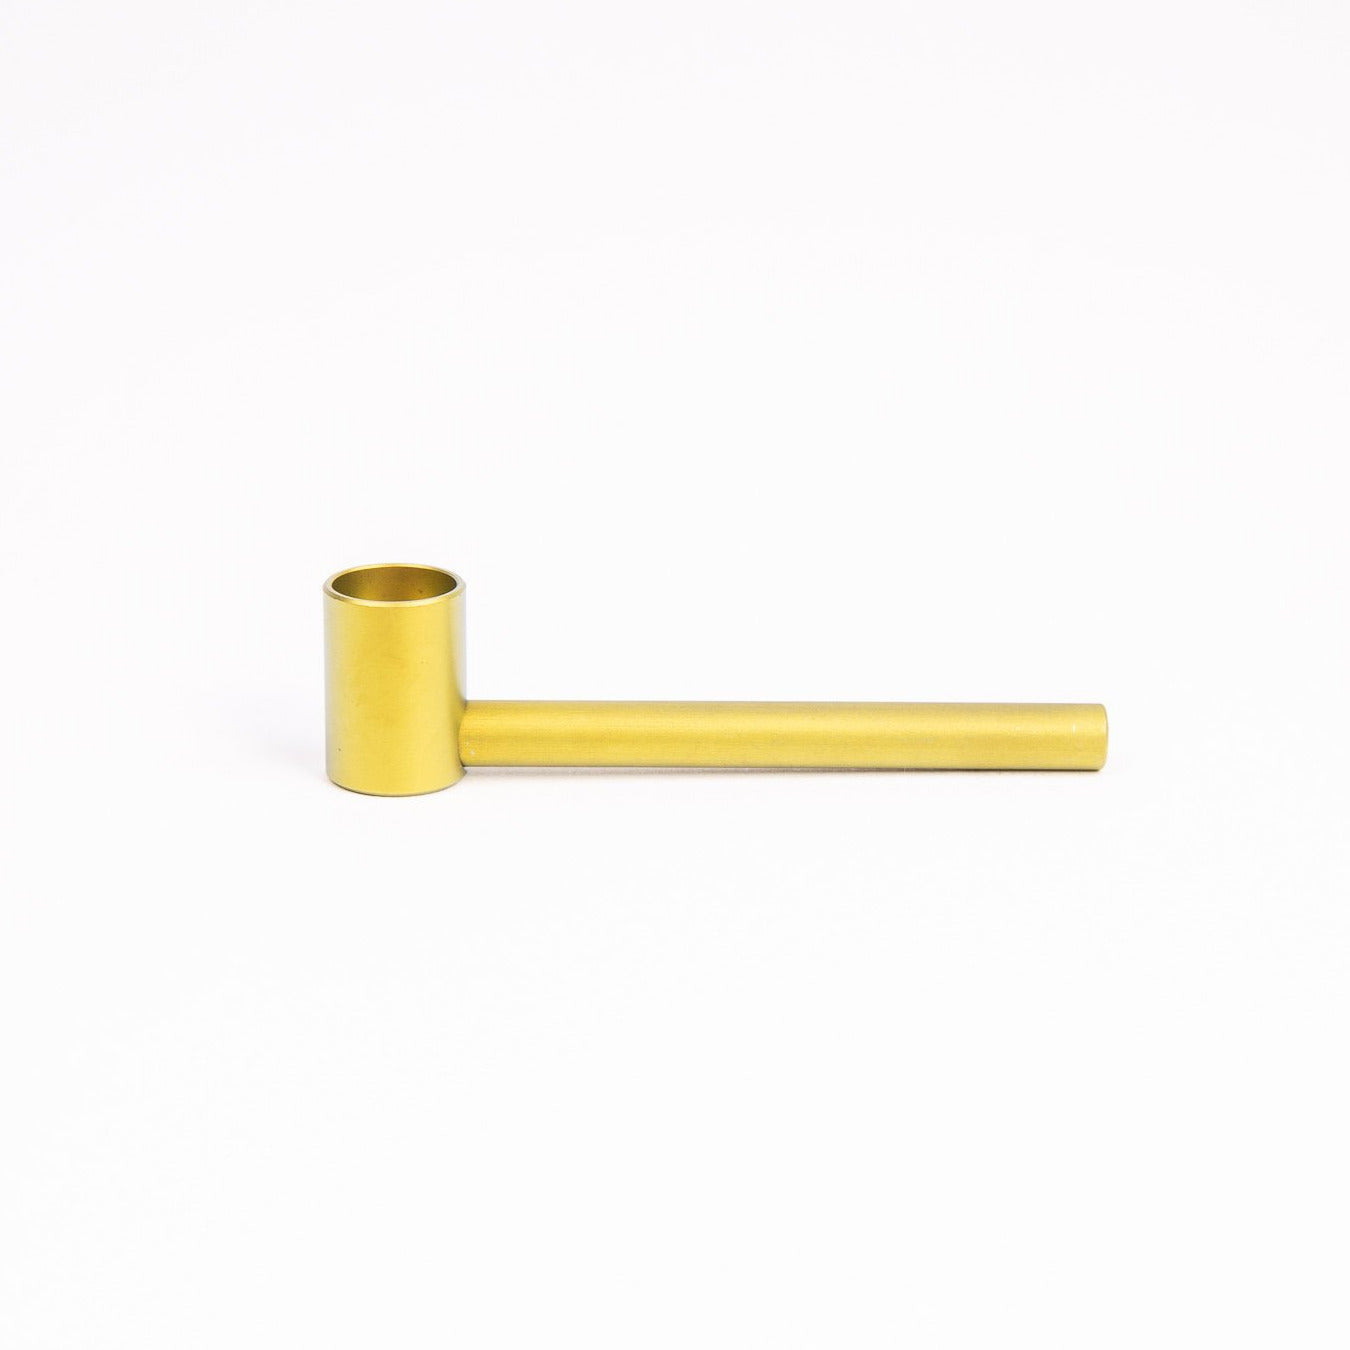 Ti Cobb Titanium threaded smoking pipe gold